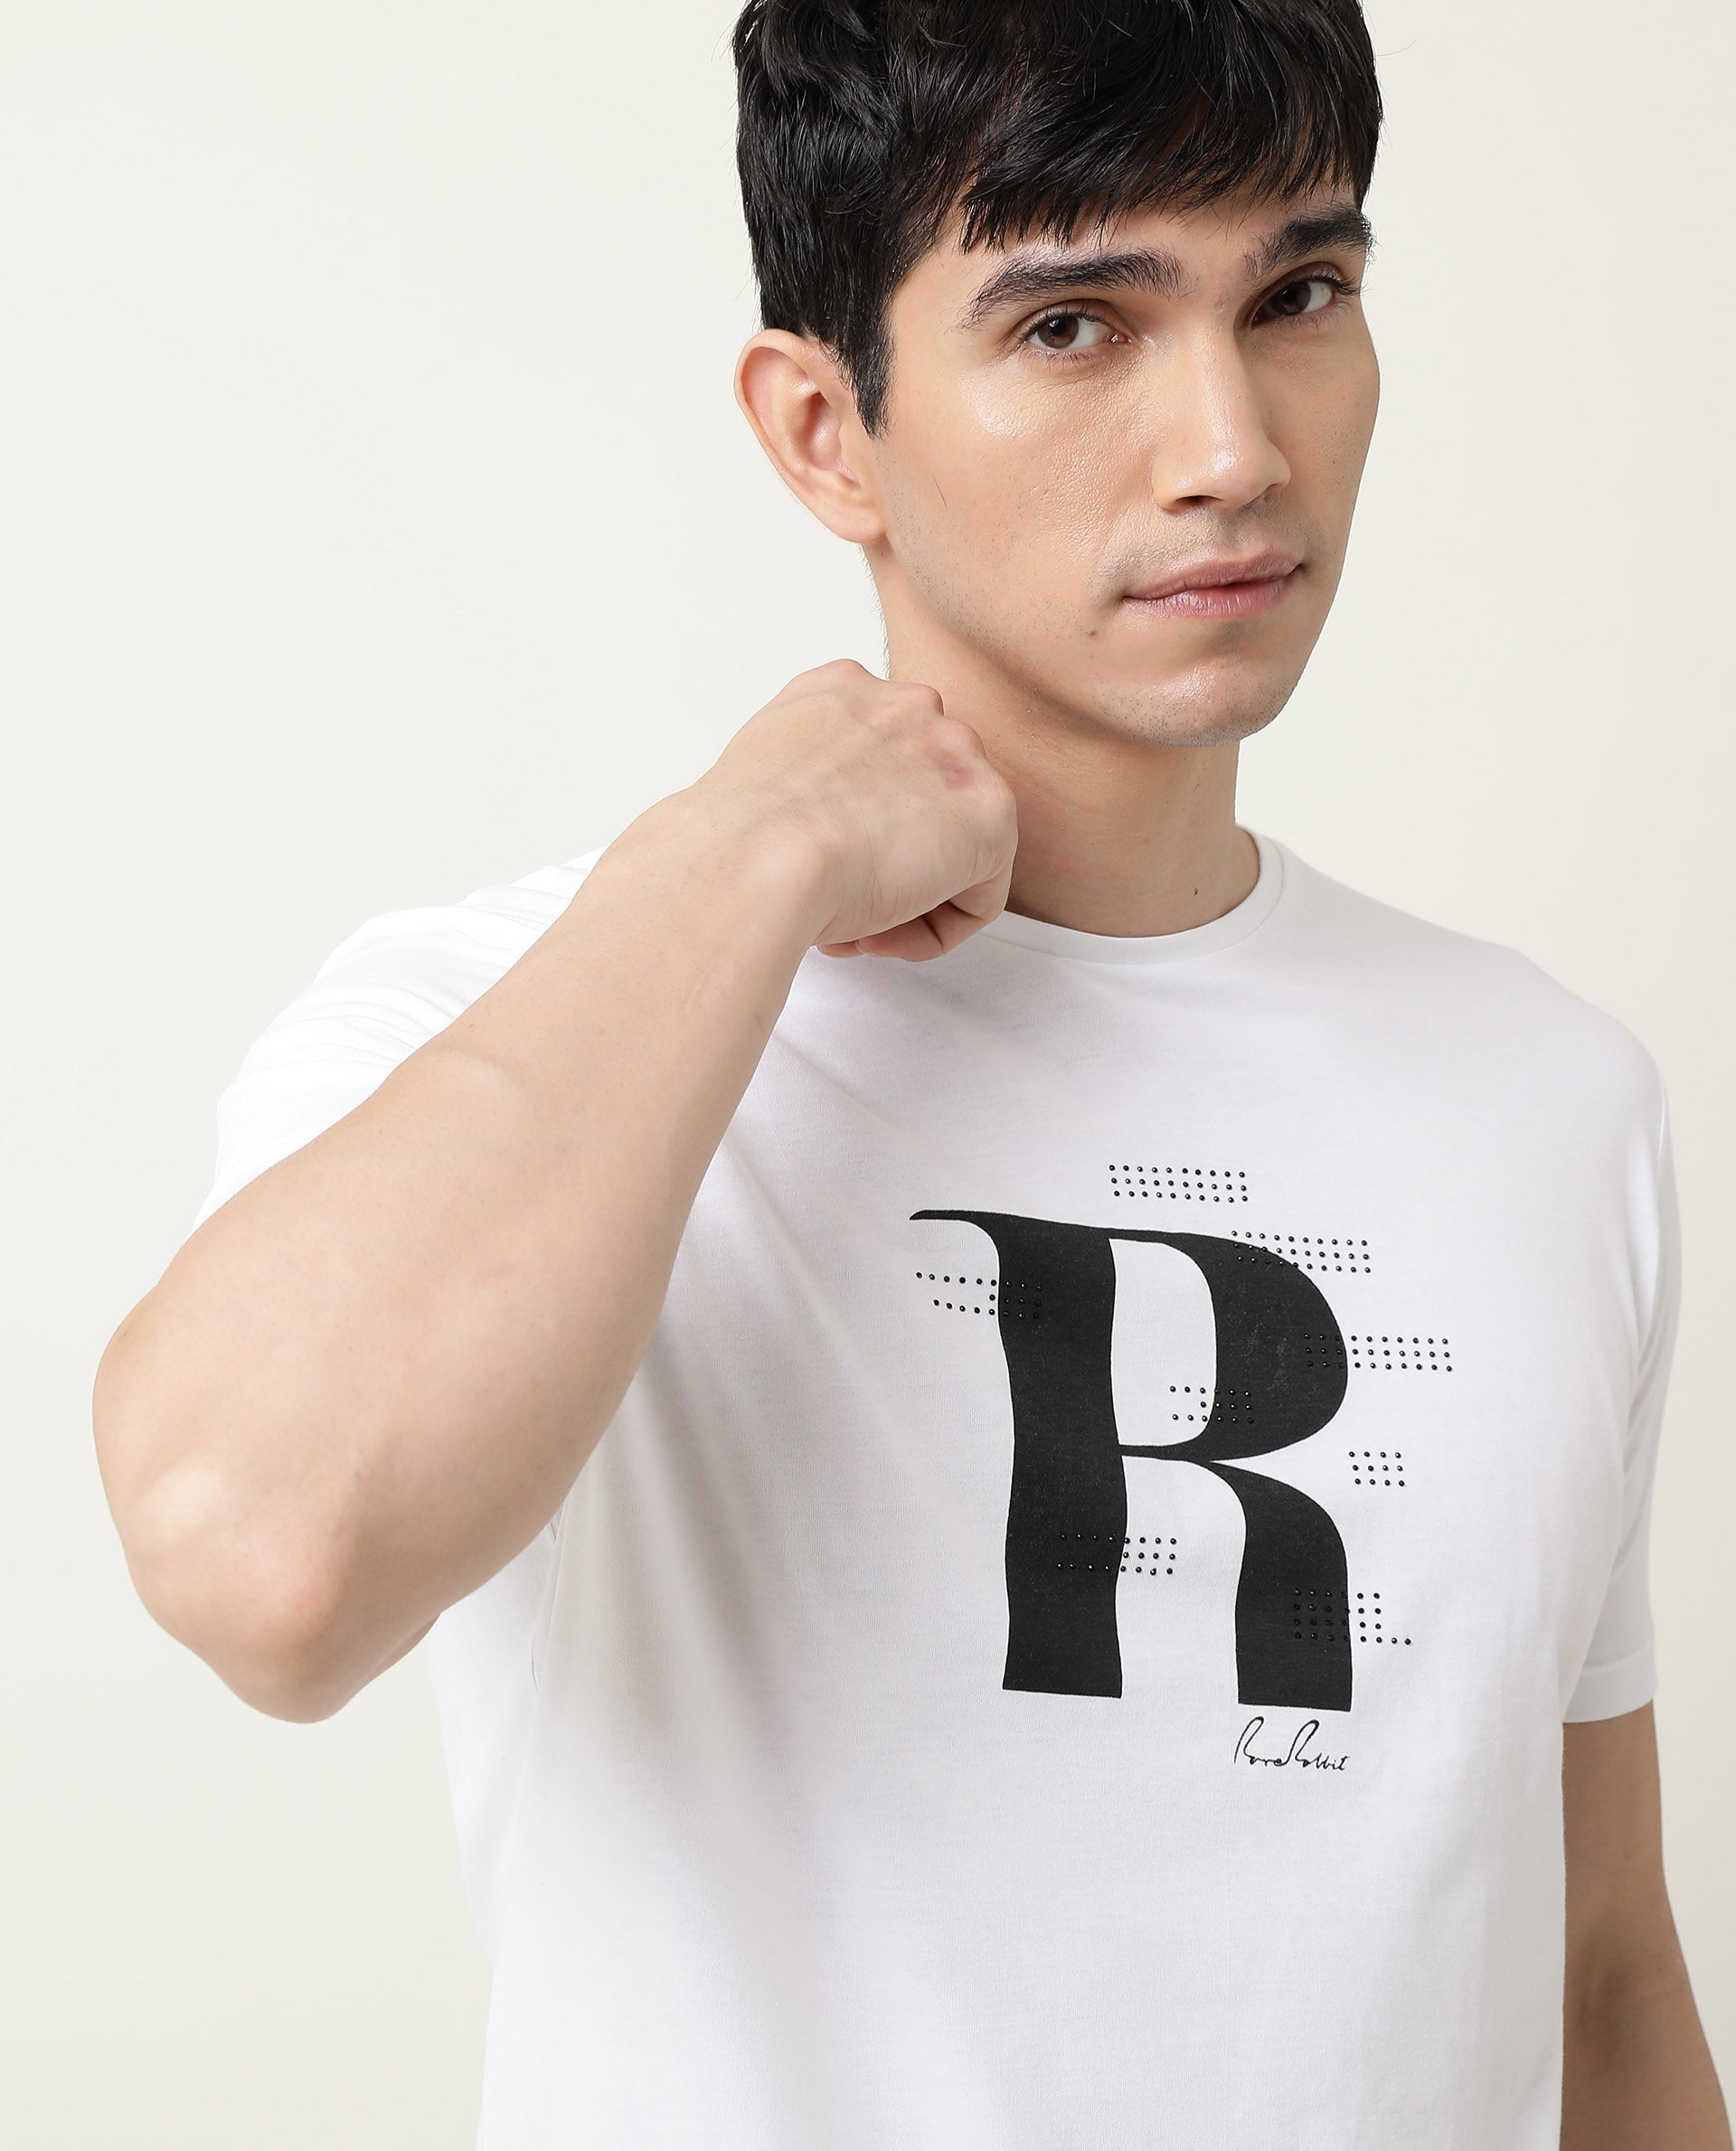 Collection Of Designer T-shirts For Men